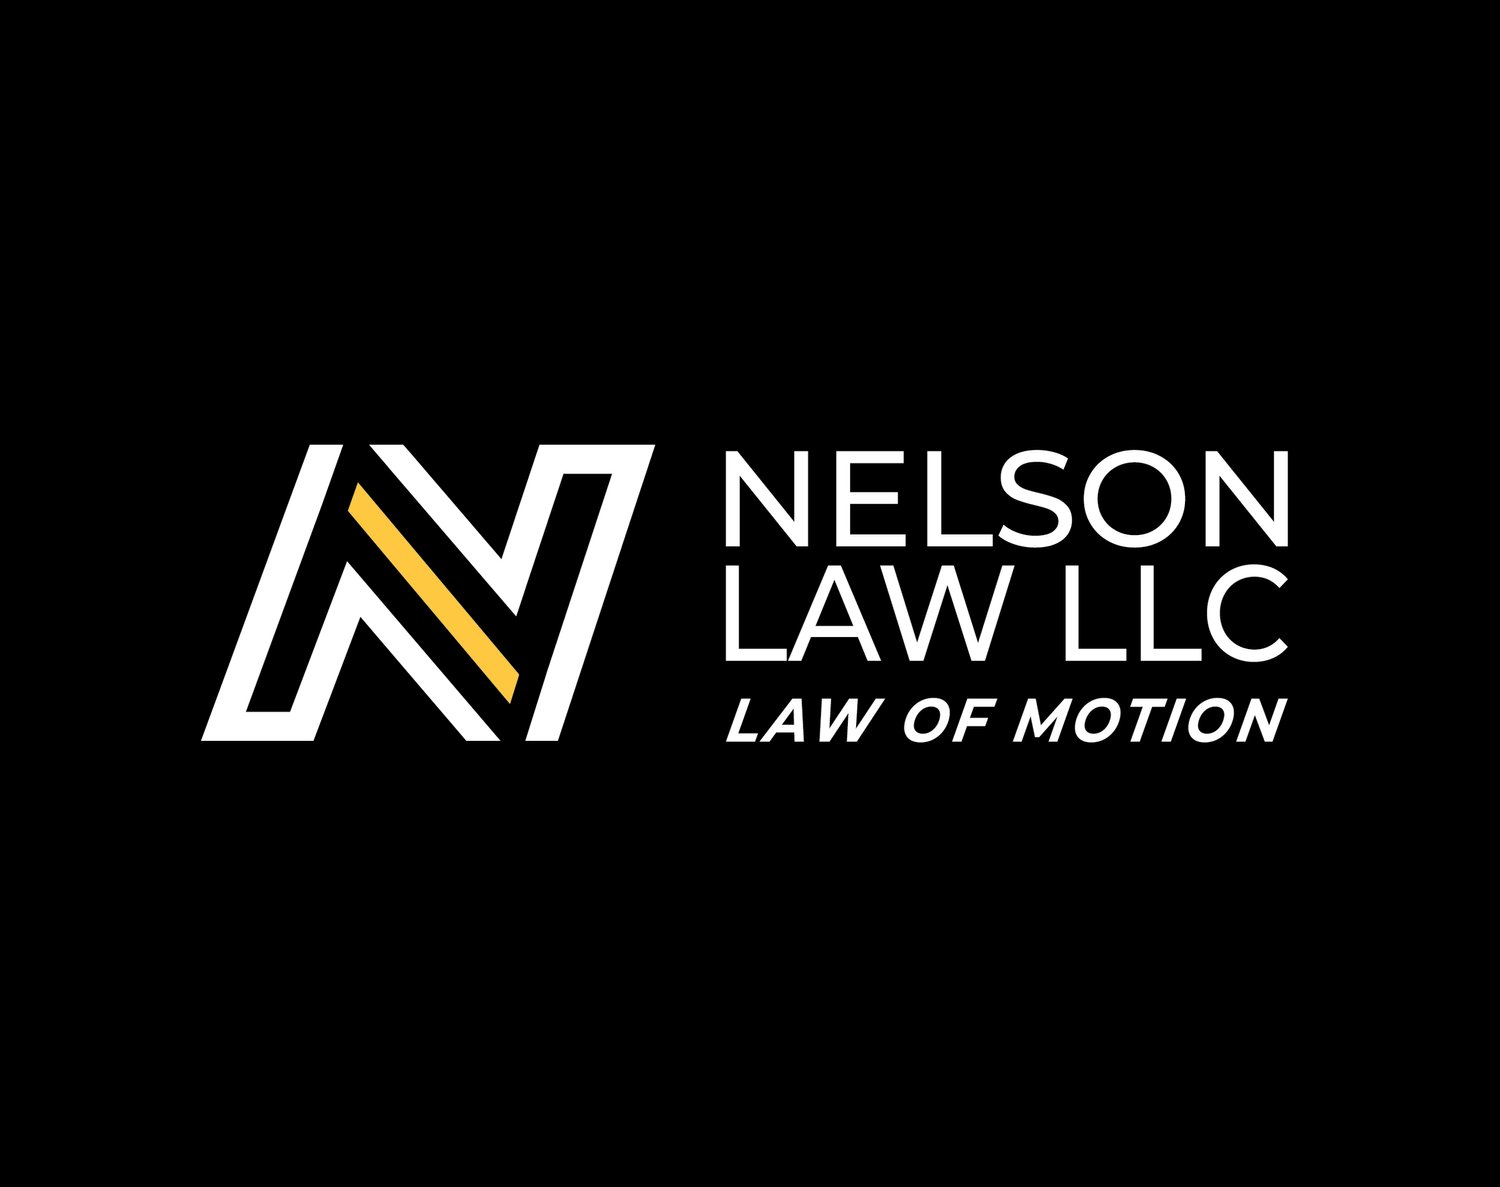 Nelson Law LLC